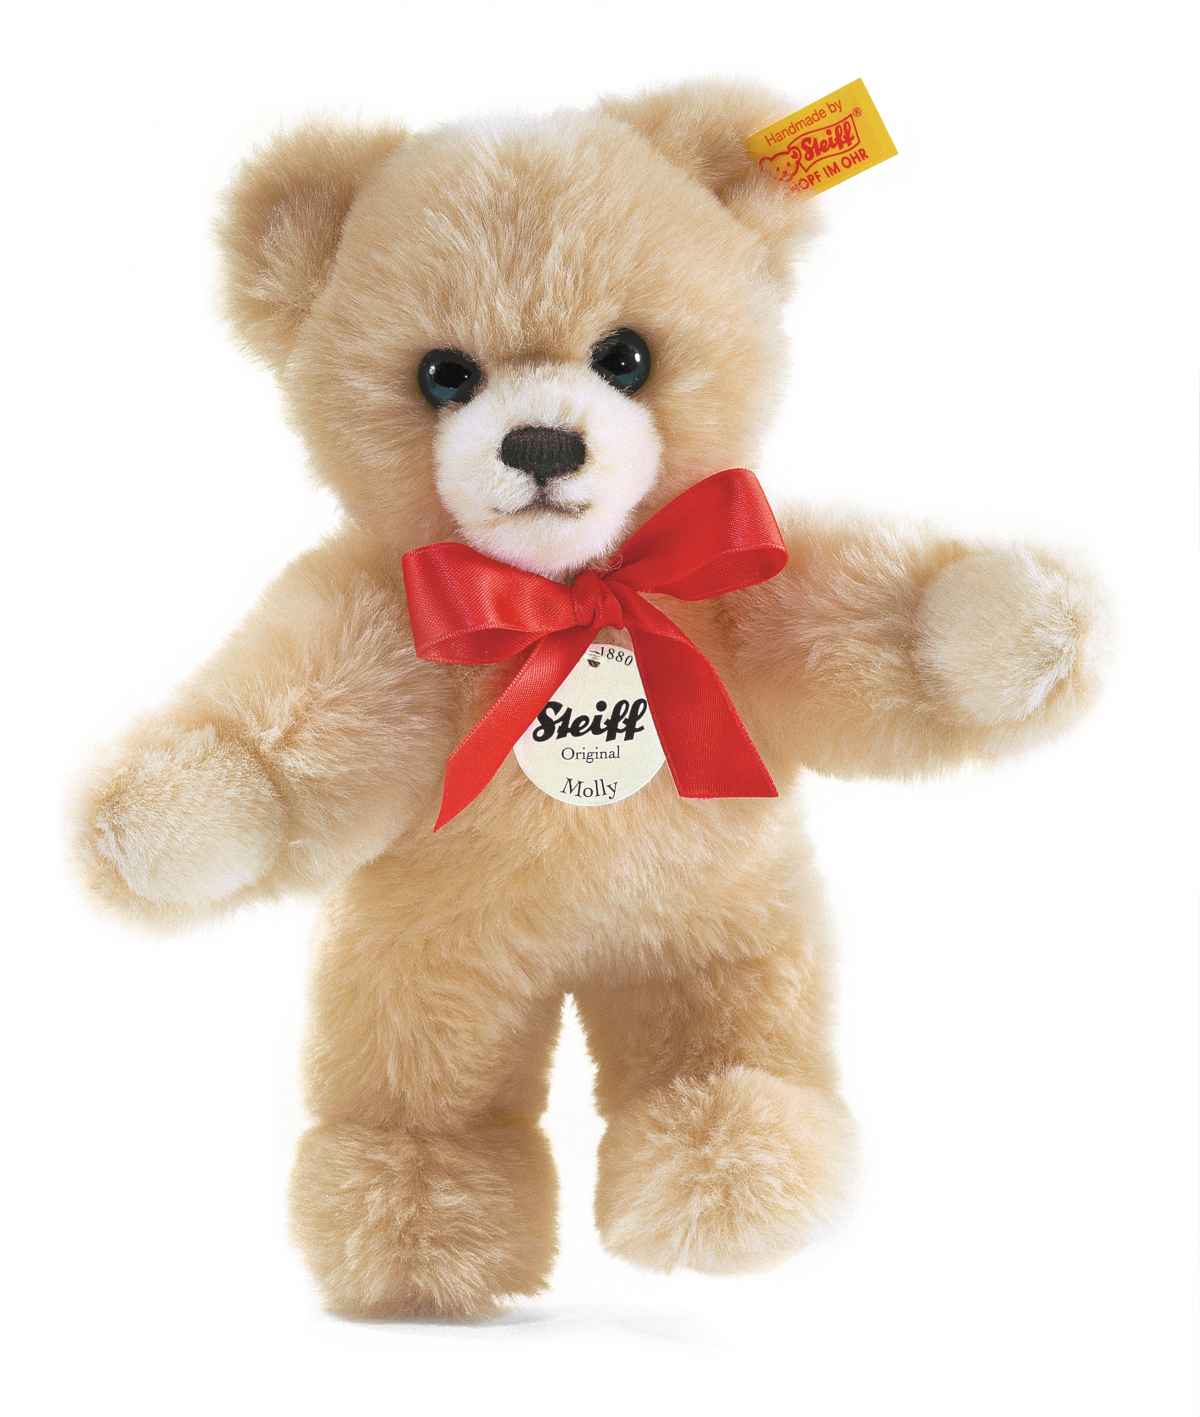 Купить игрушки. Медведь Steiff Teddy Bear. Мишка Тедди Штайф. Плюшевый медведь Steiff Teddy. Мягкие игрушки Steiff.